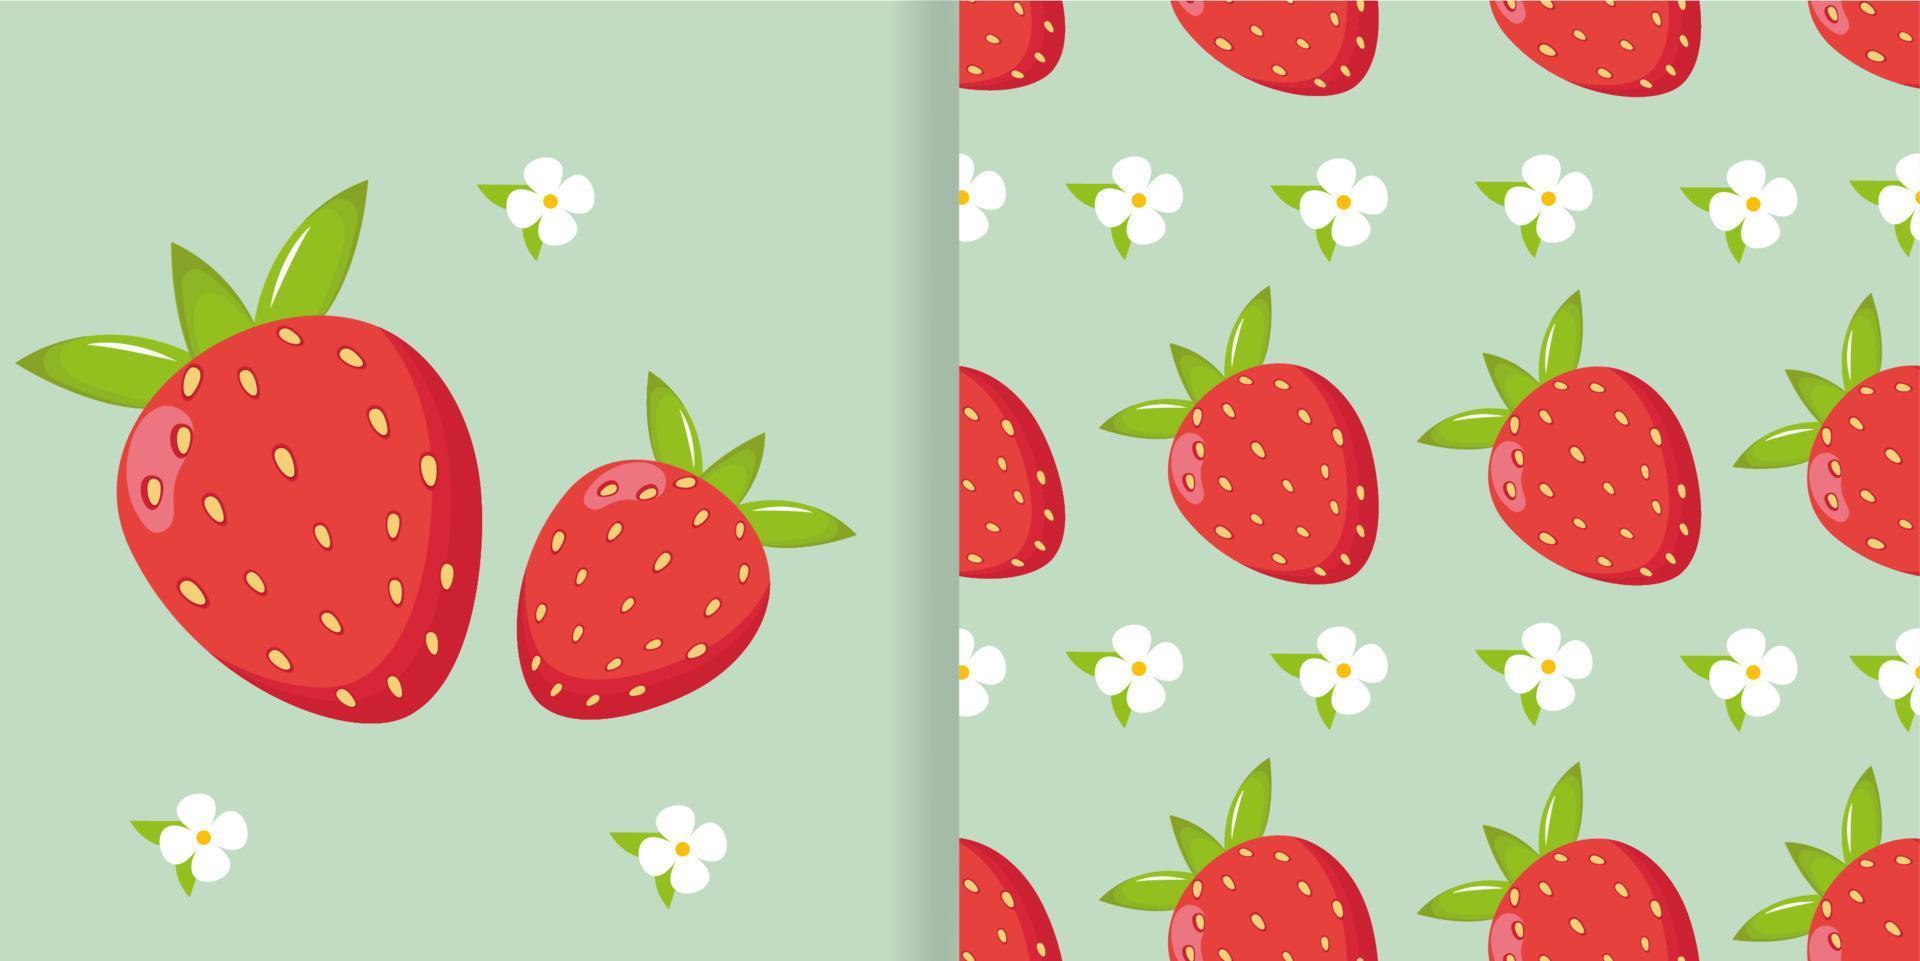 Erdbeere Illustration mit nahtlos Erdbeere Muster. vektor